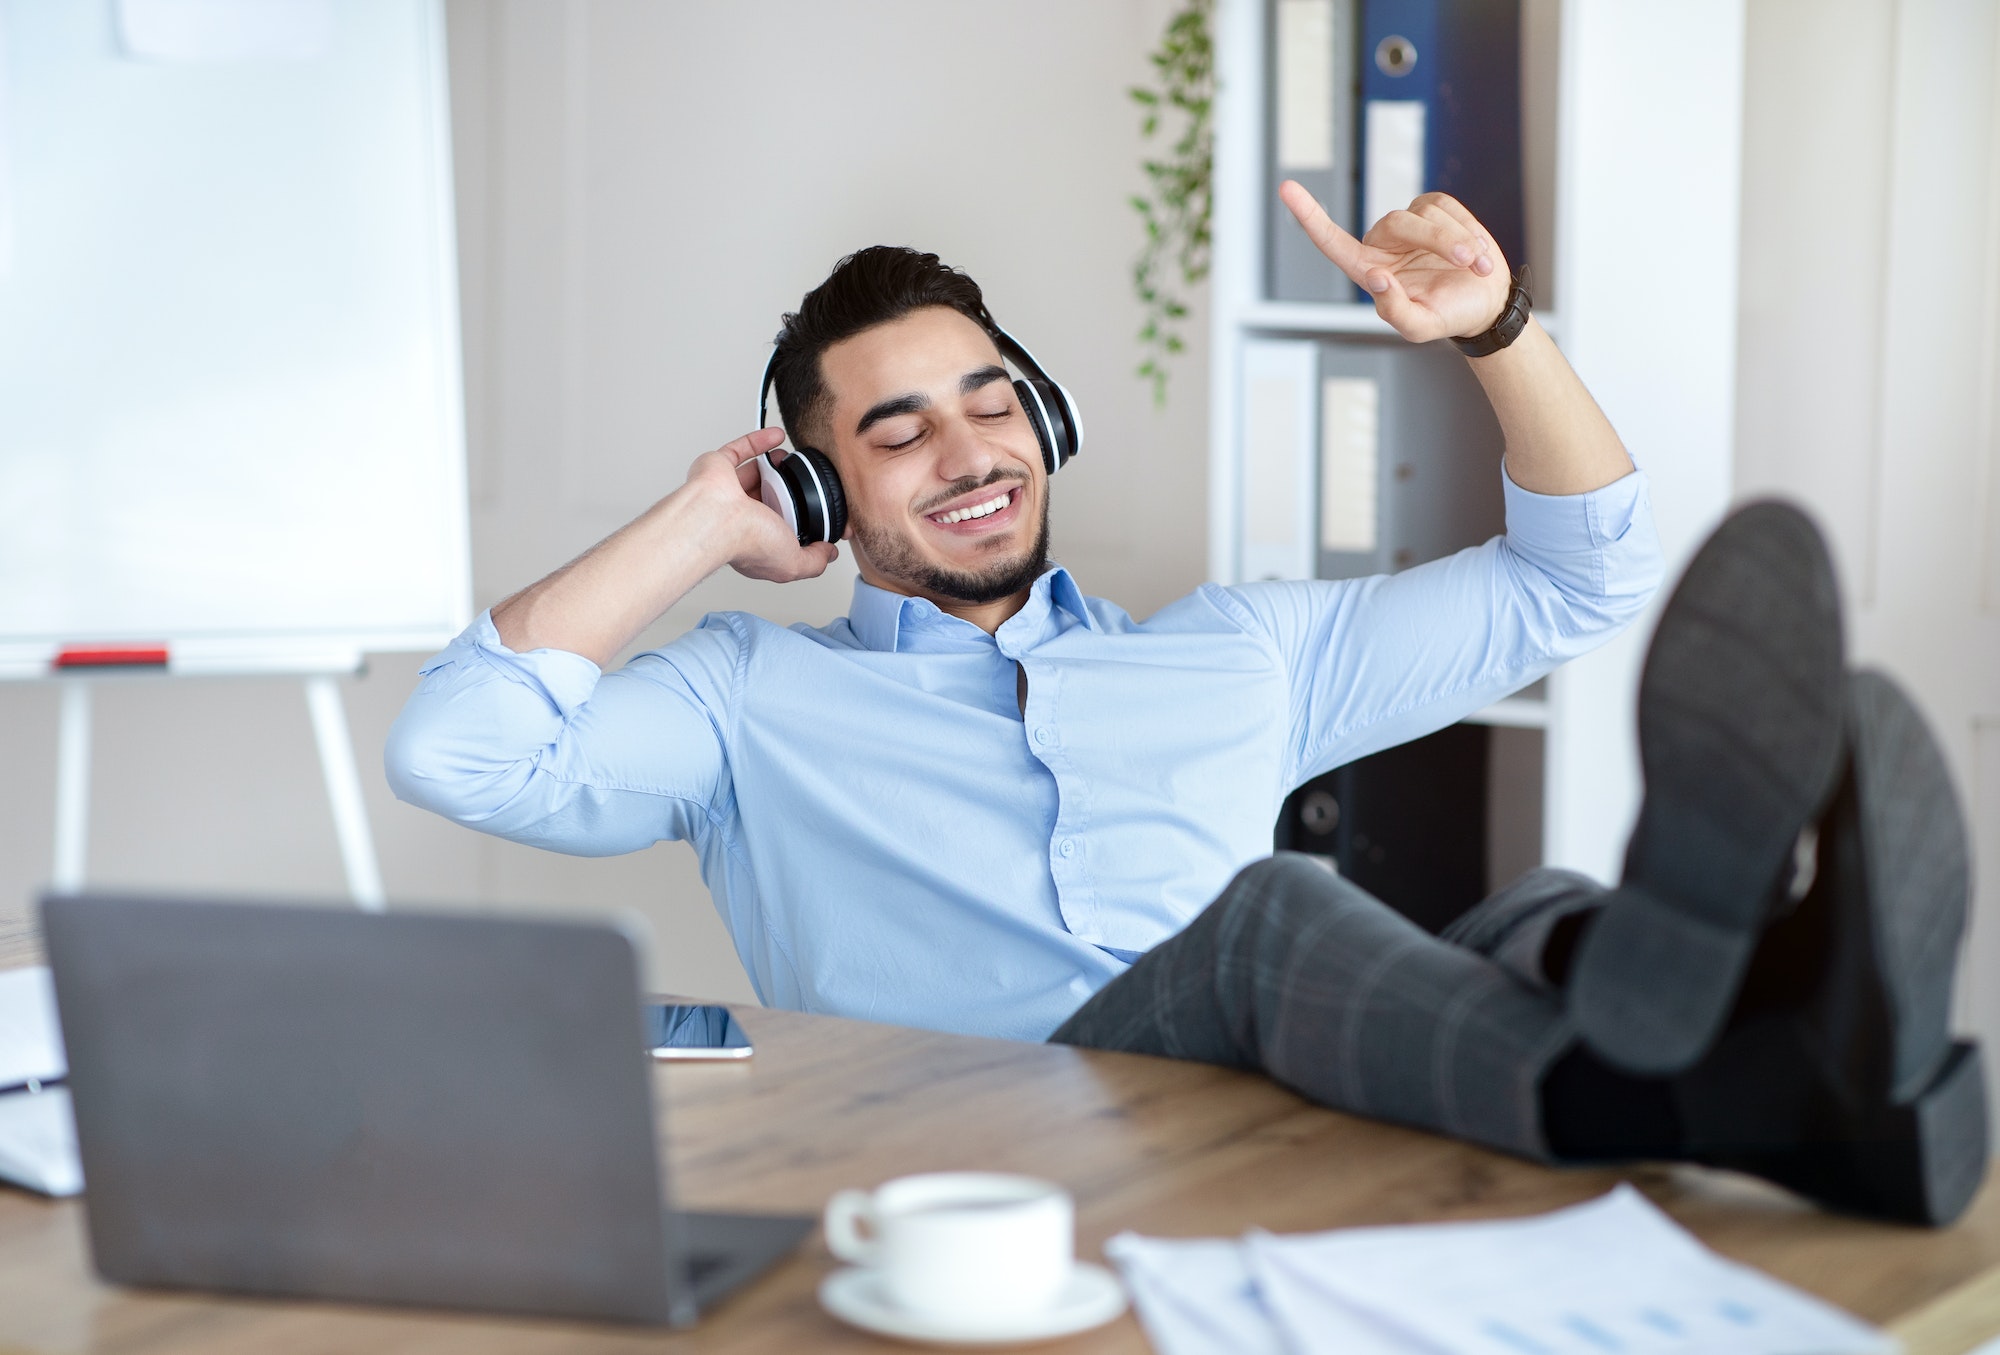 Taking break at office. Joyful Arab man listening to music in wireless headphones, relaxing at